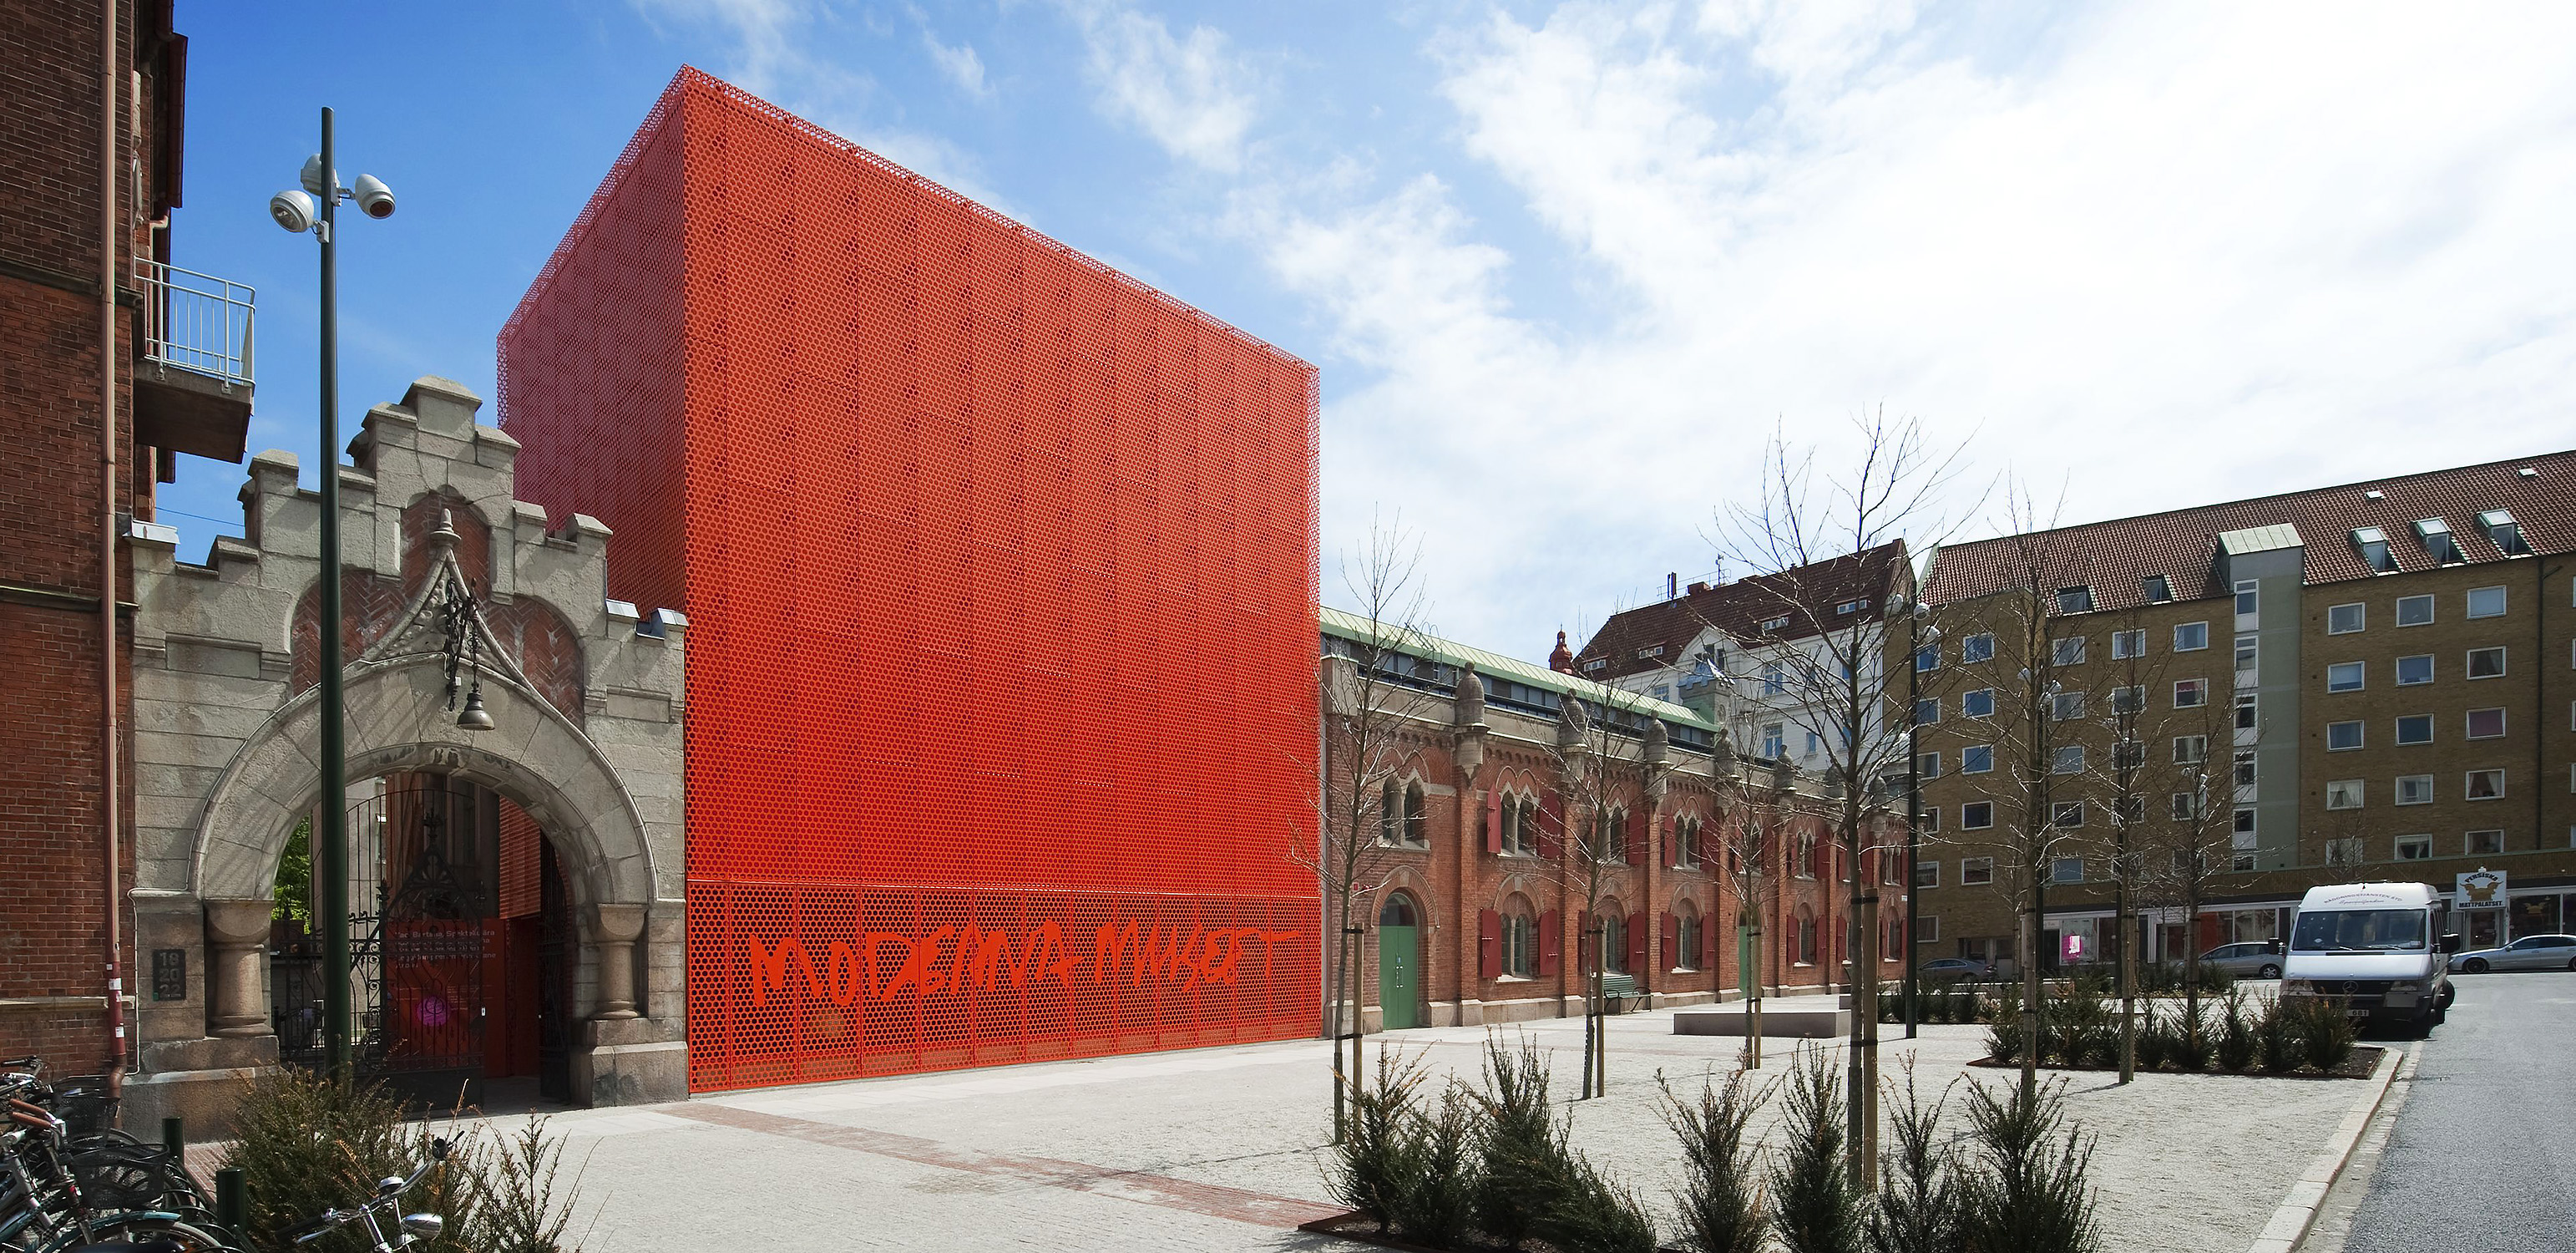 Moderna Museet Malmö | Art museum in Malmö